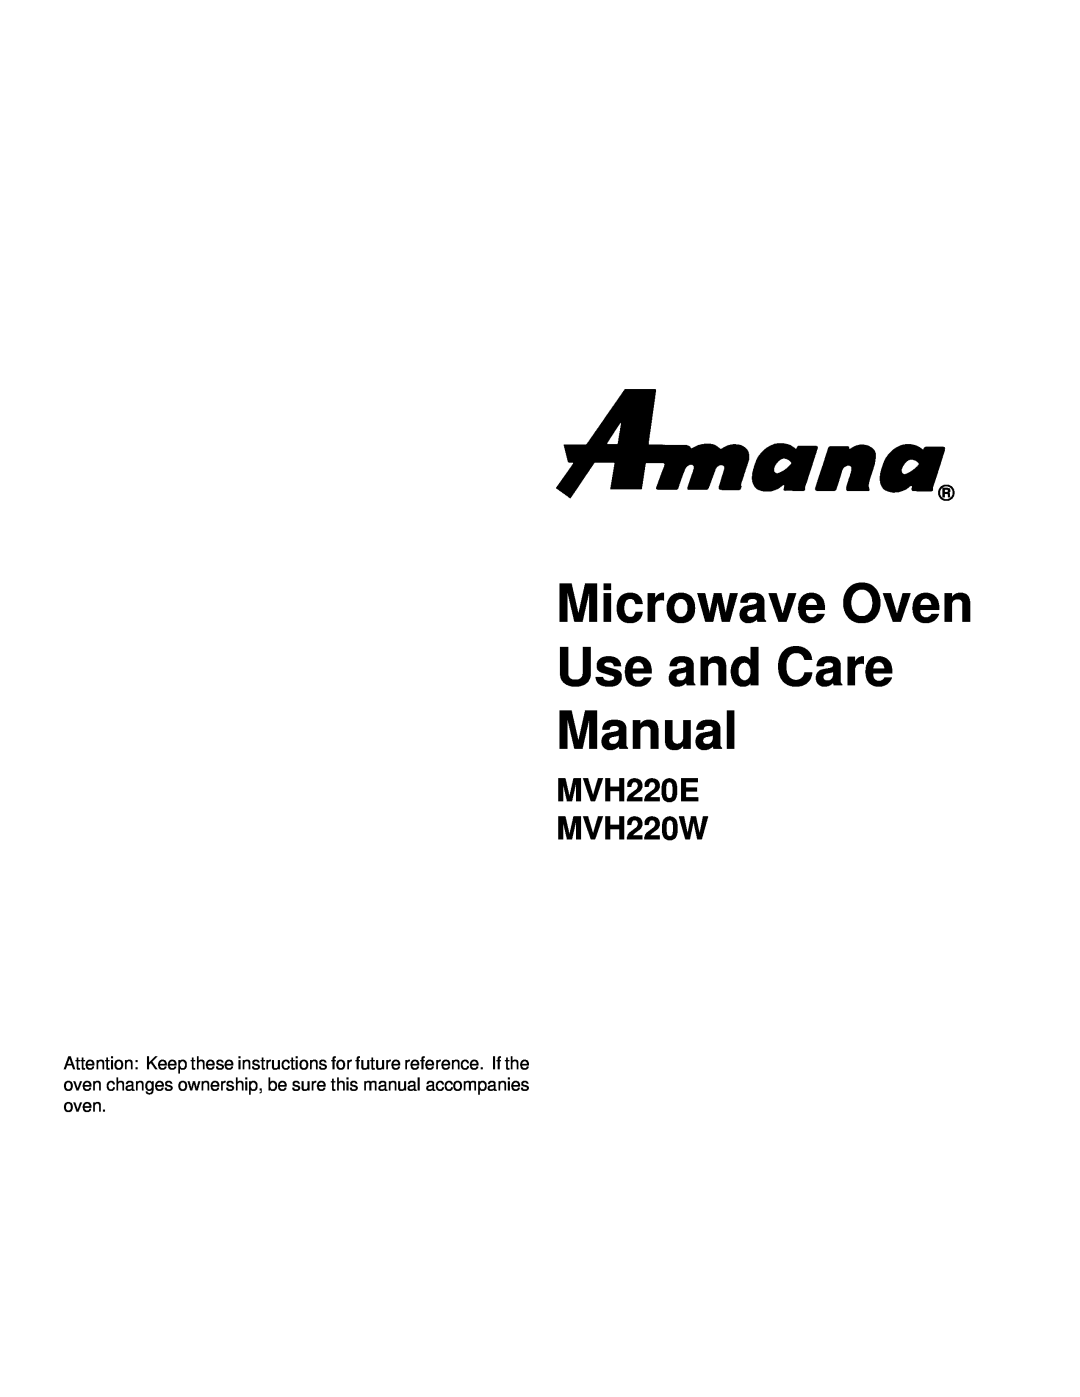 Amana MVH220E installation instructions Over the Range Microwave Oven, Installation Instructions MWT4461D MWT4461WW 